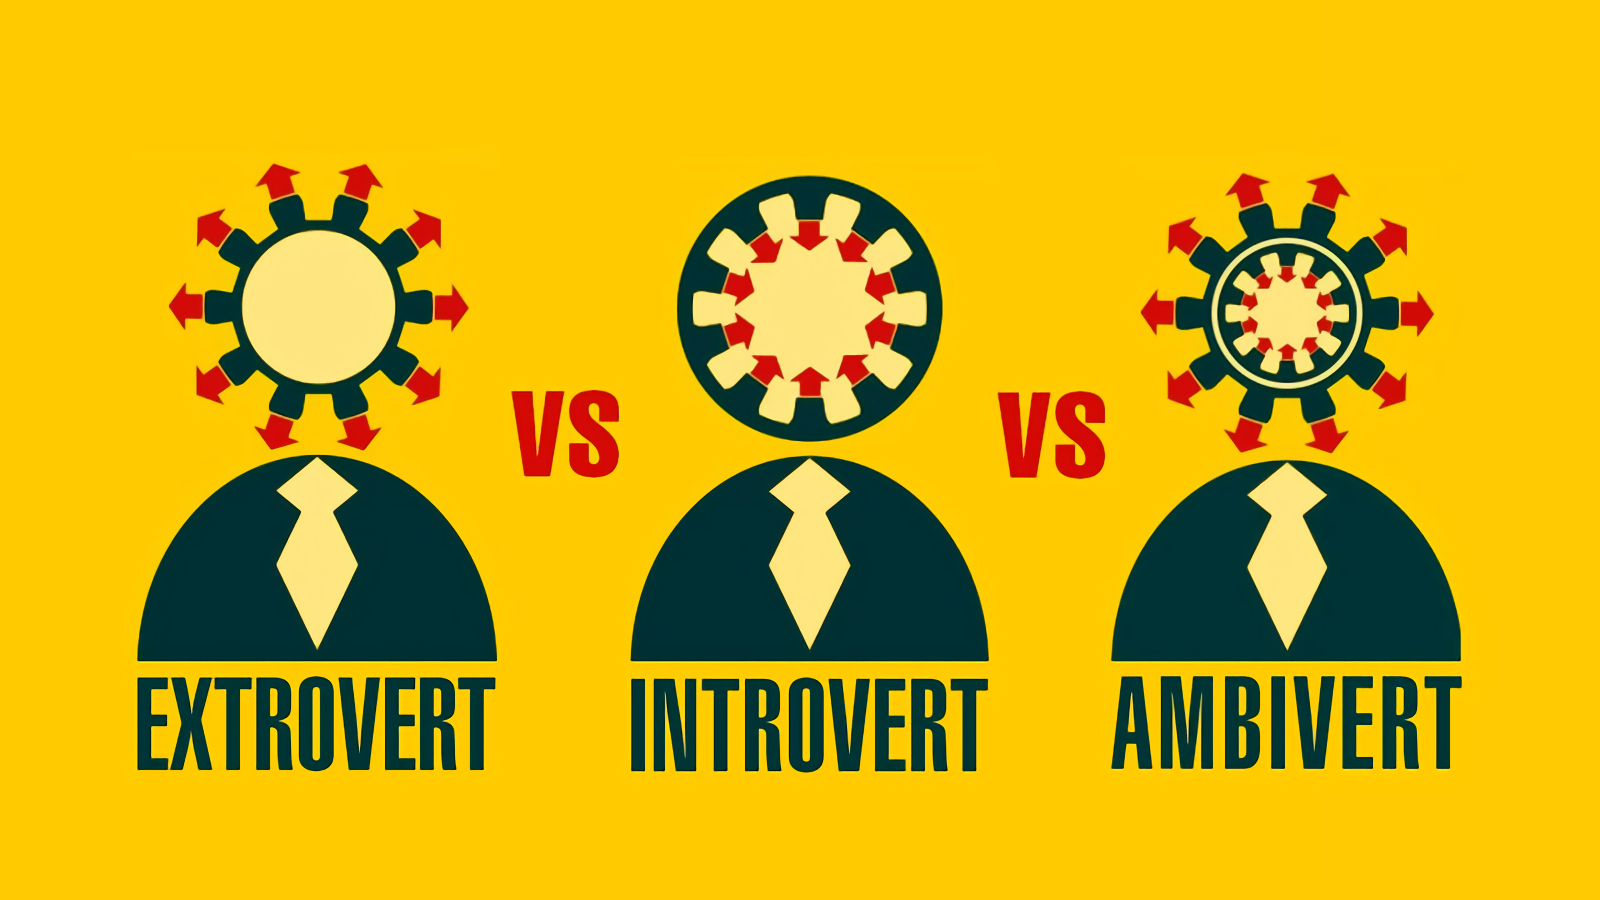 Are You An Introvert, An Ambivert, Or An Extrovert?